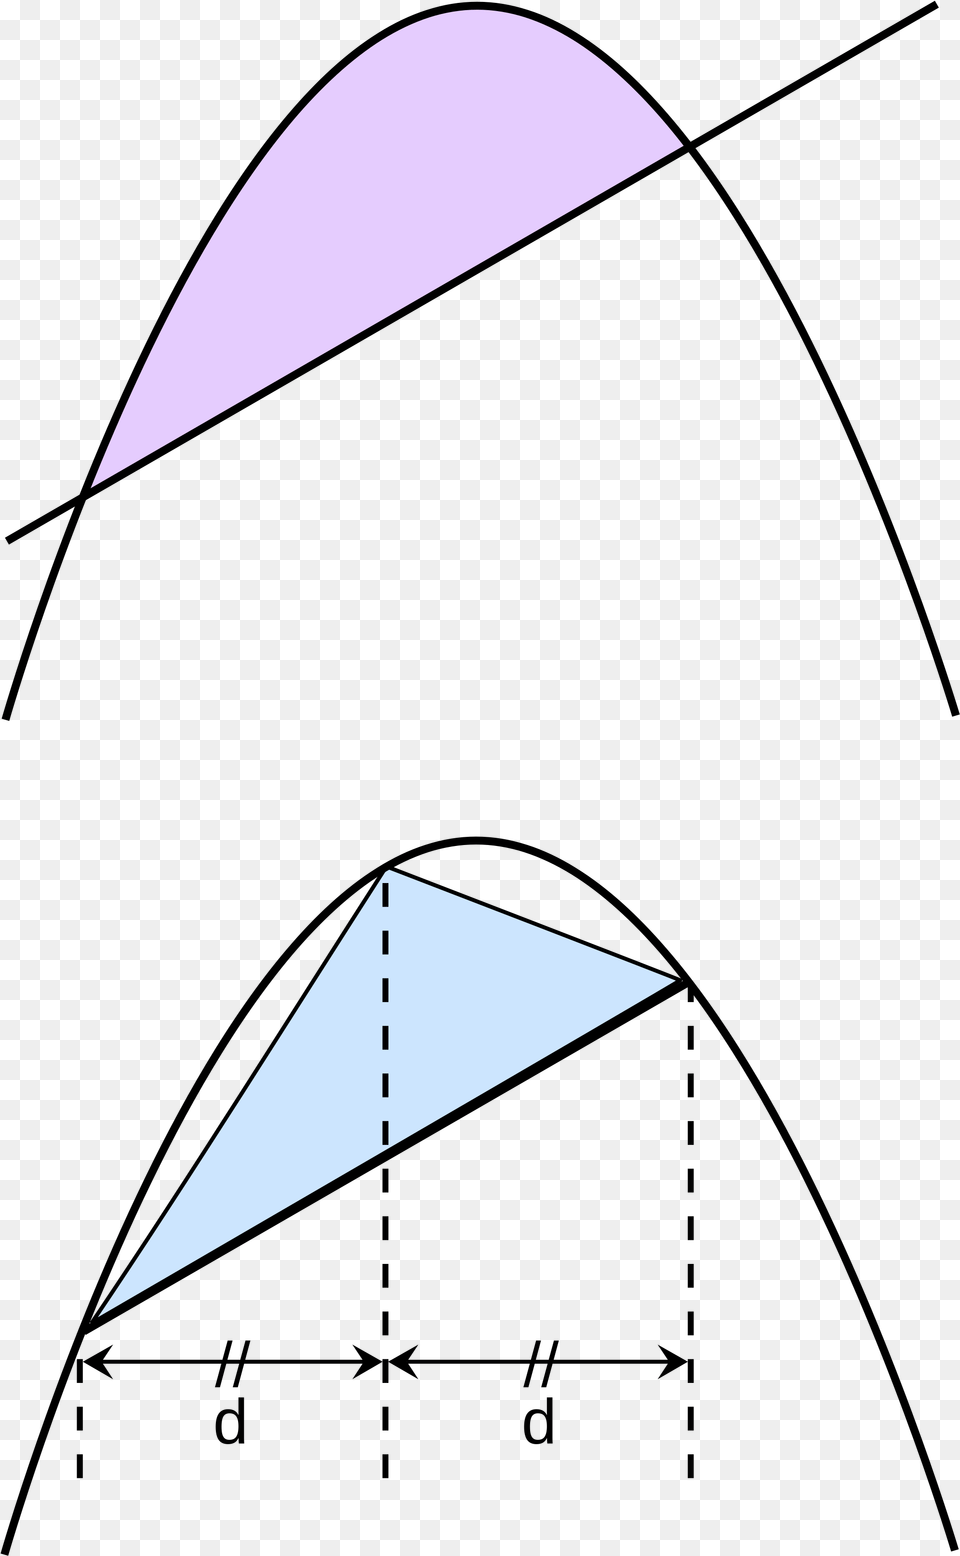 Arqumedes Demostr Que El Rea Del Segmento Parablico Arquimedes Aportes Matematicos, Triangle, Outdoors Free Png Download